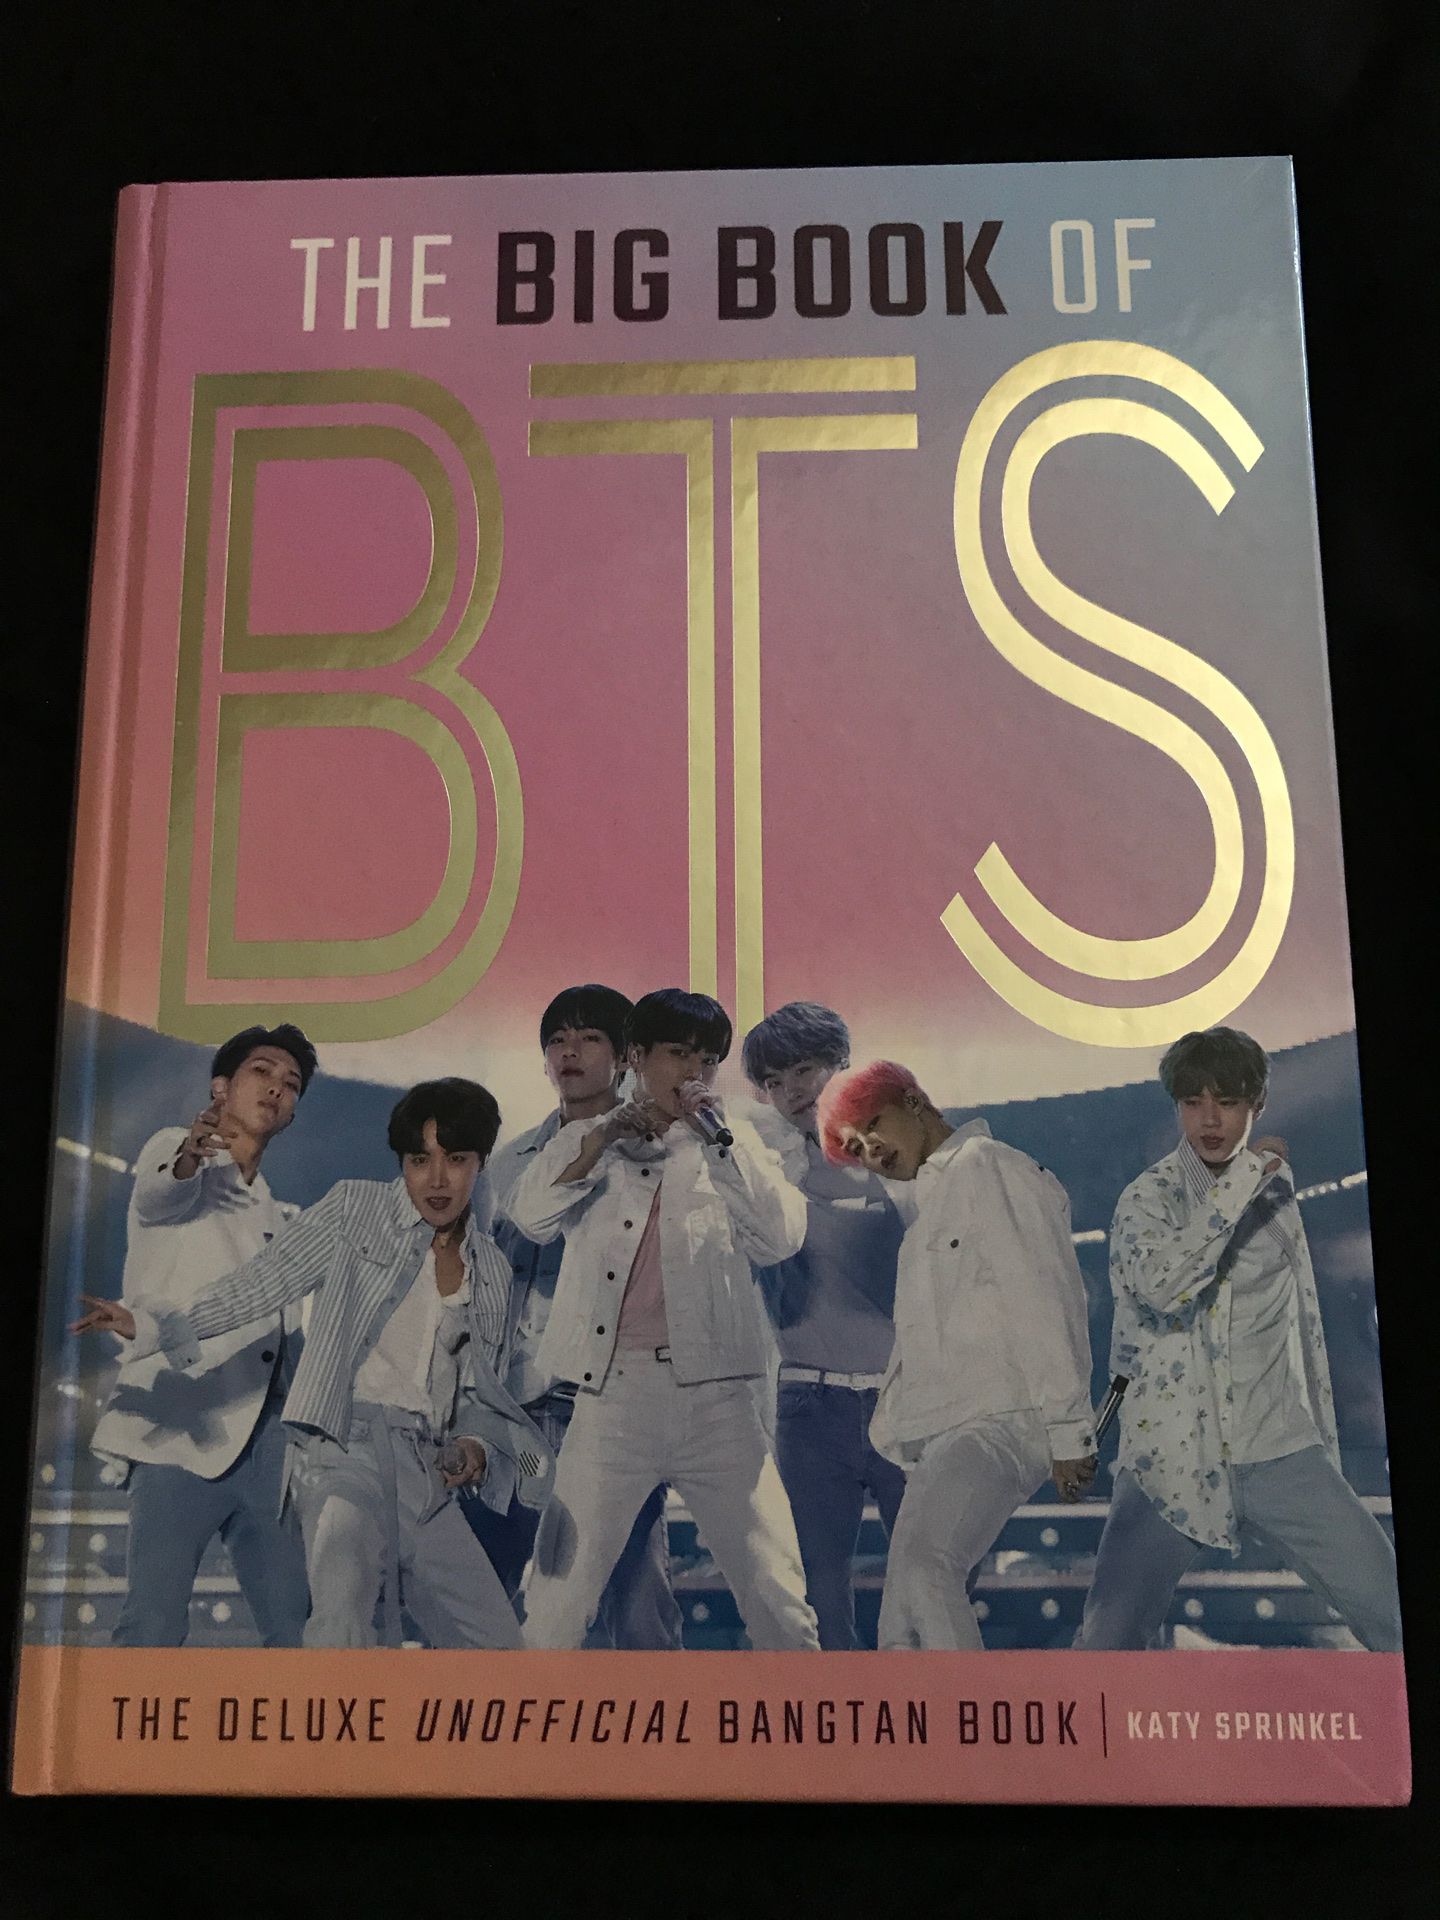 THE BIG BOOK OF BTS